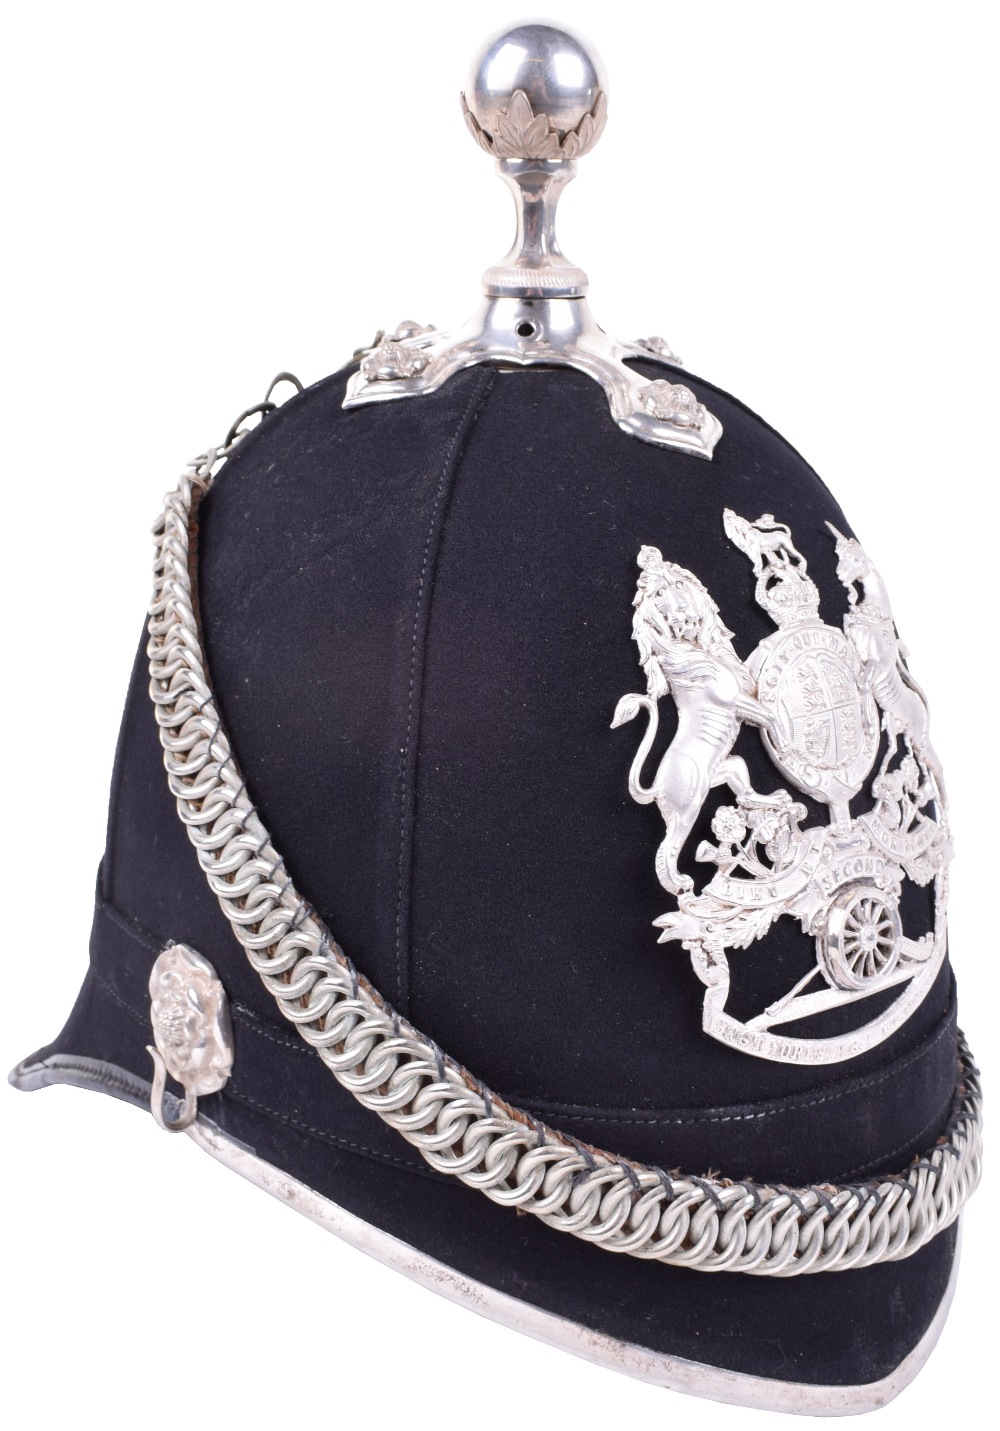 Post 1902 2nd East Yorks Royal Garrison Artillery Volunteers Officers Home Service Helmet